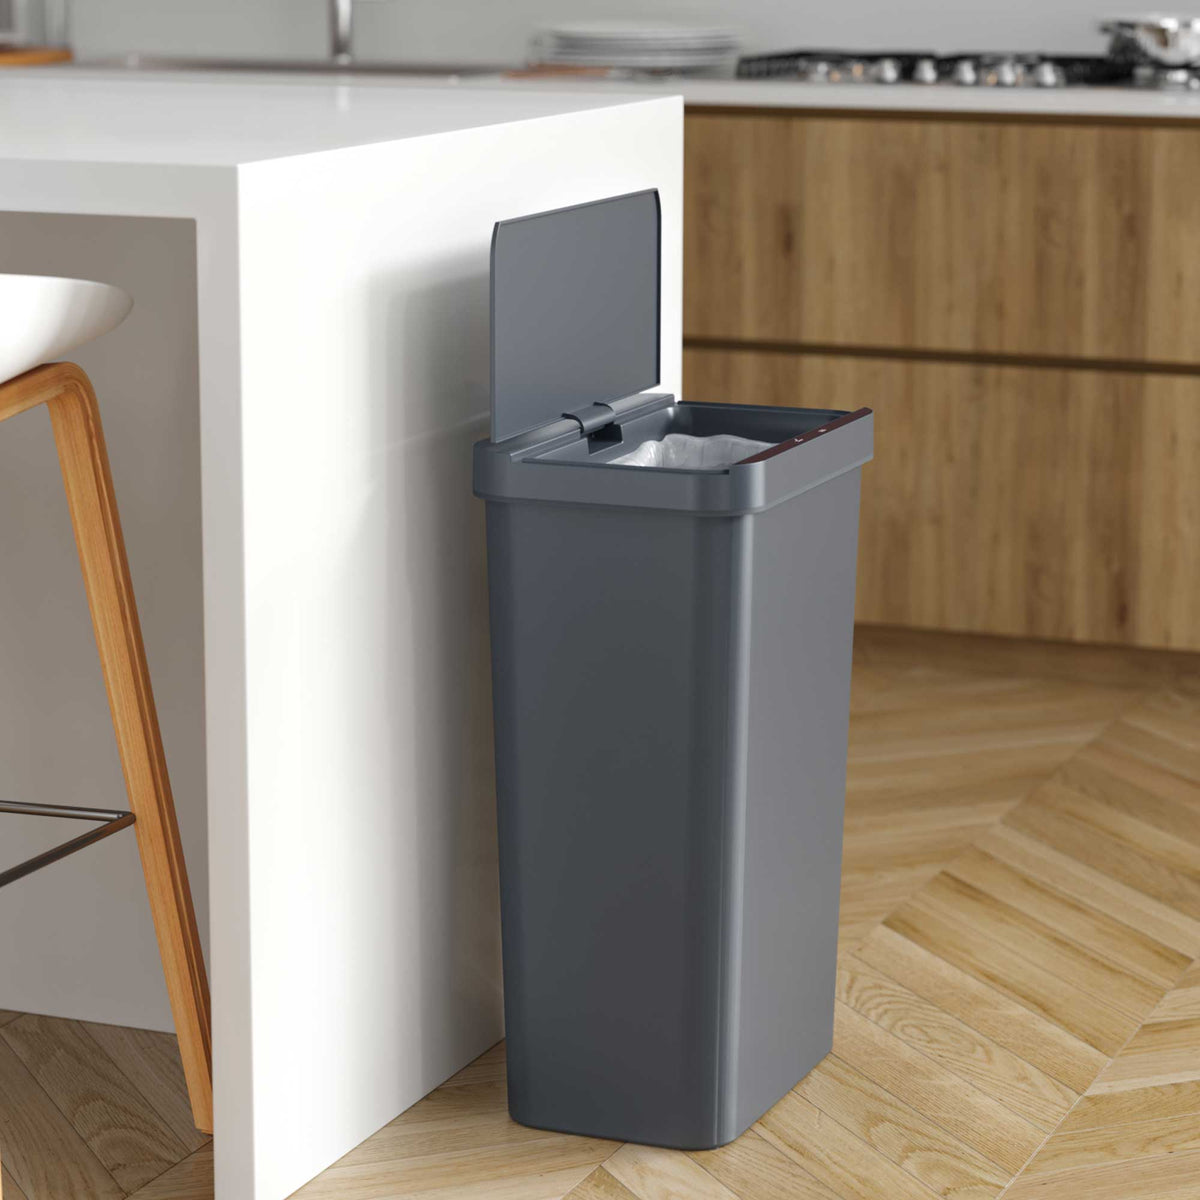 13.2 Gallon / 50 Liter Prime Plastic Sensor Trash Can (Gray) in kitchen